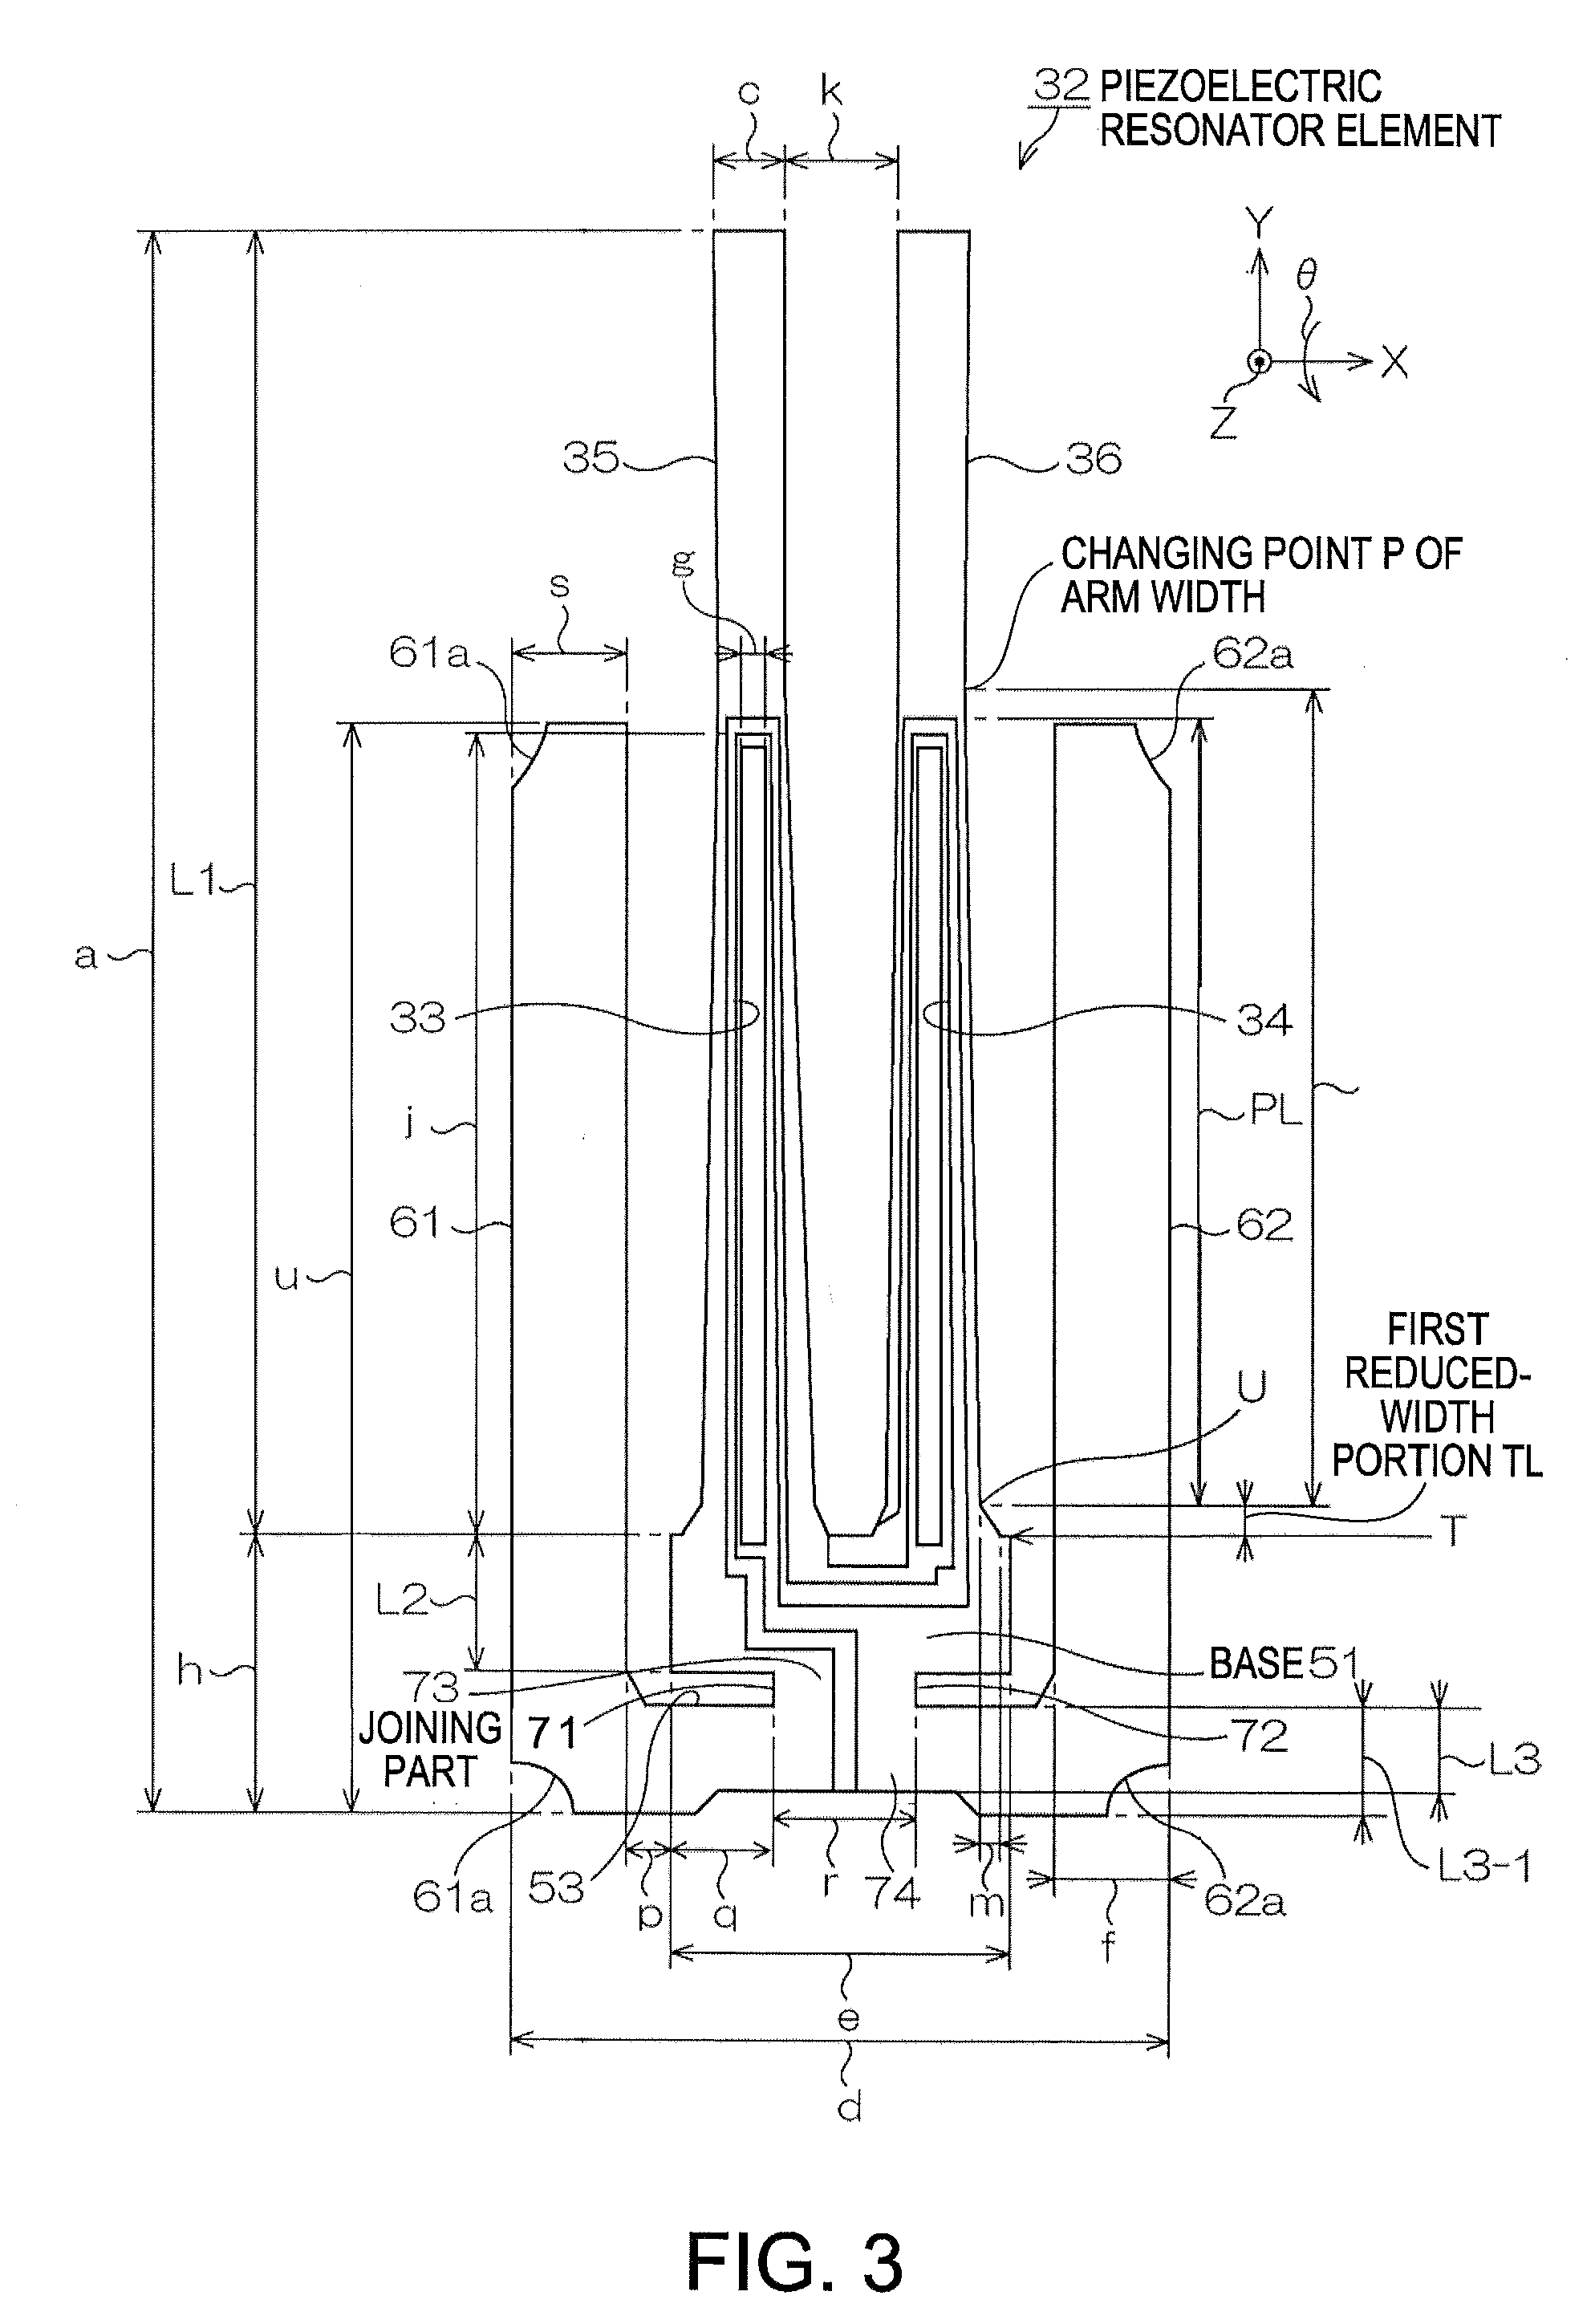 Piezoelectric resonator element and piezoelectric device